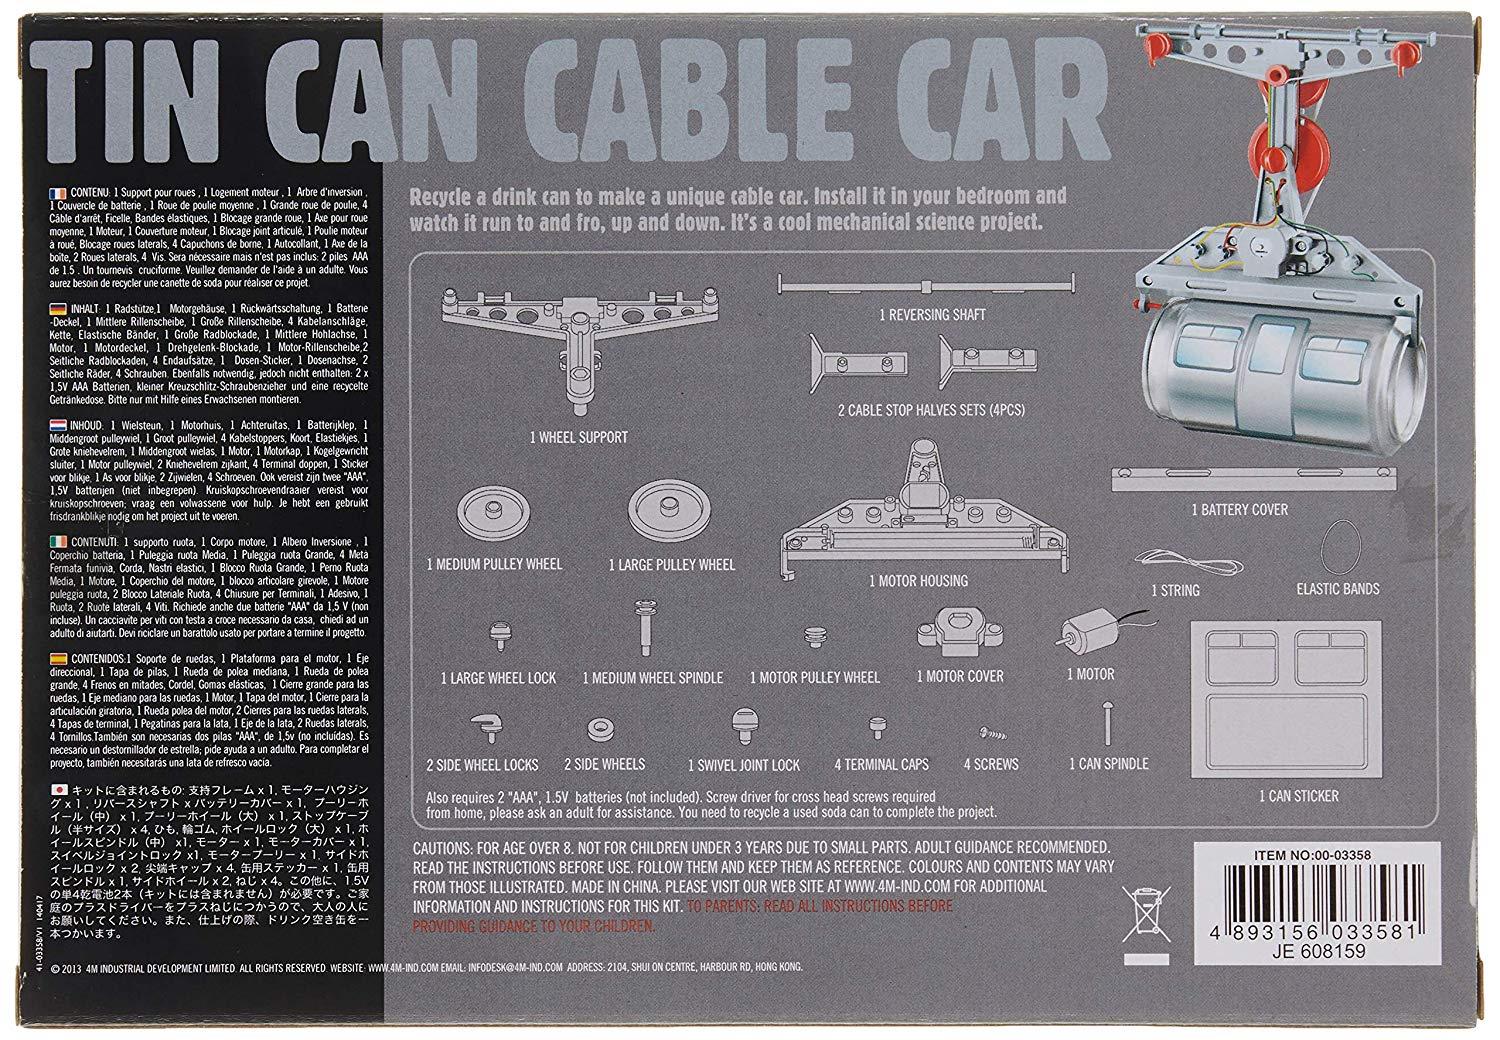 Great Gizmos 4M KidzRobotix Tin Can Cable Car